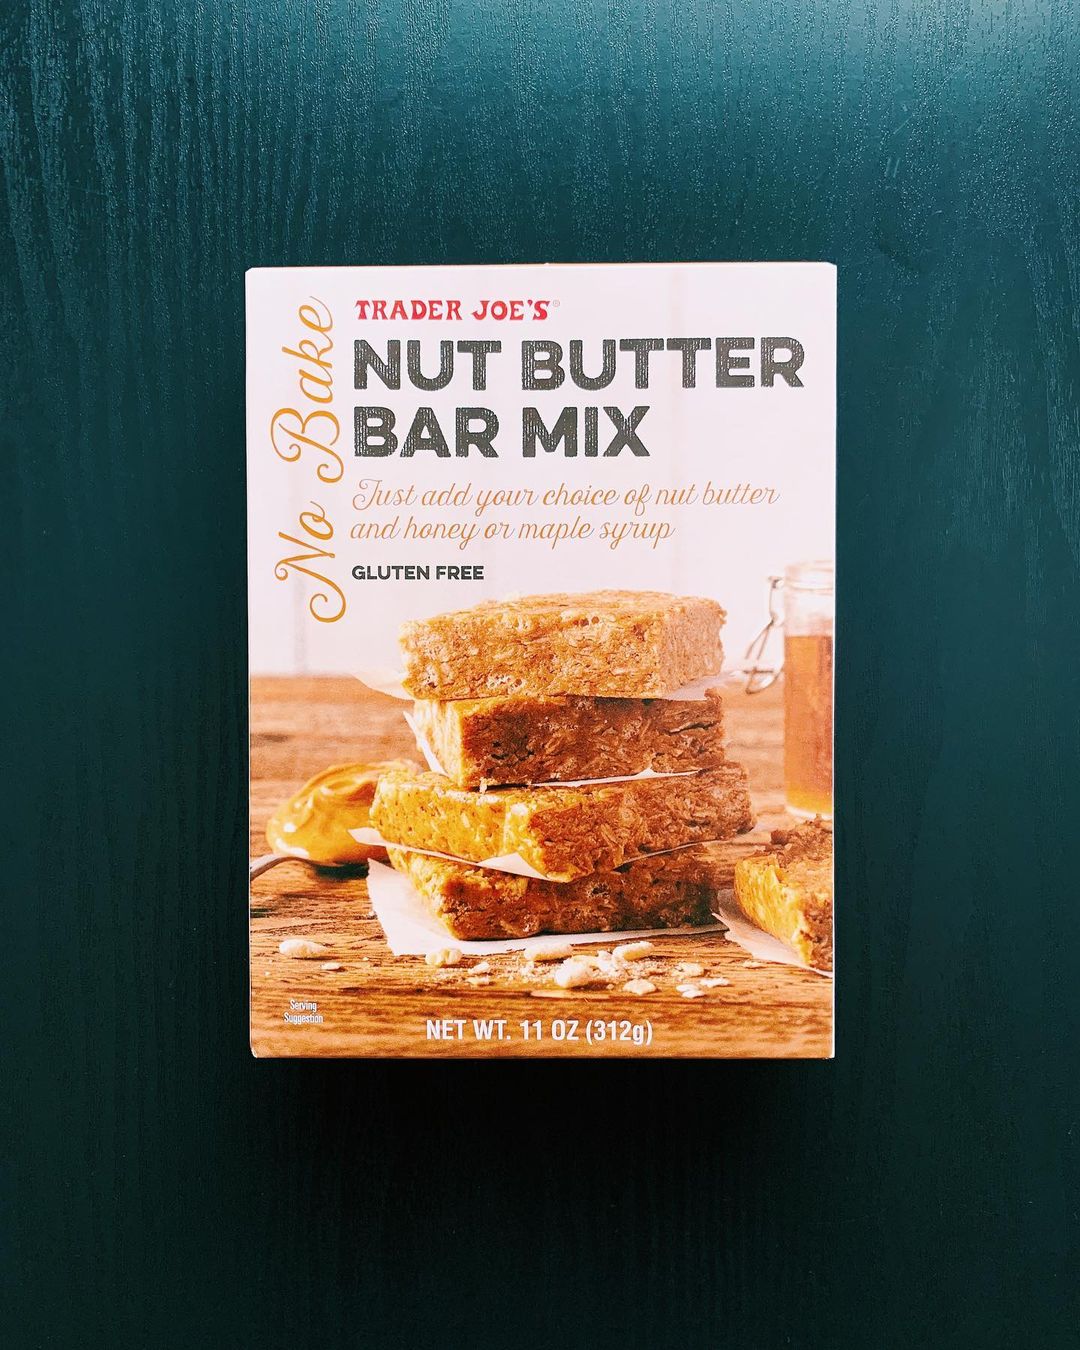 Nut Butter Bar Mix: 7.5/10This nut b...